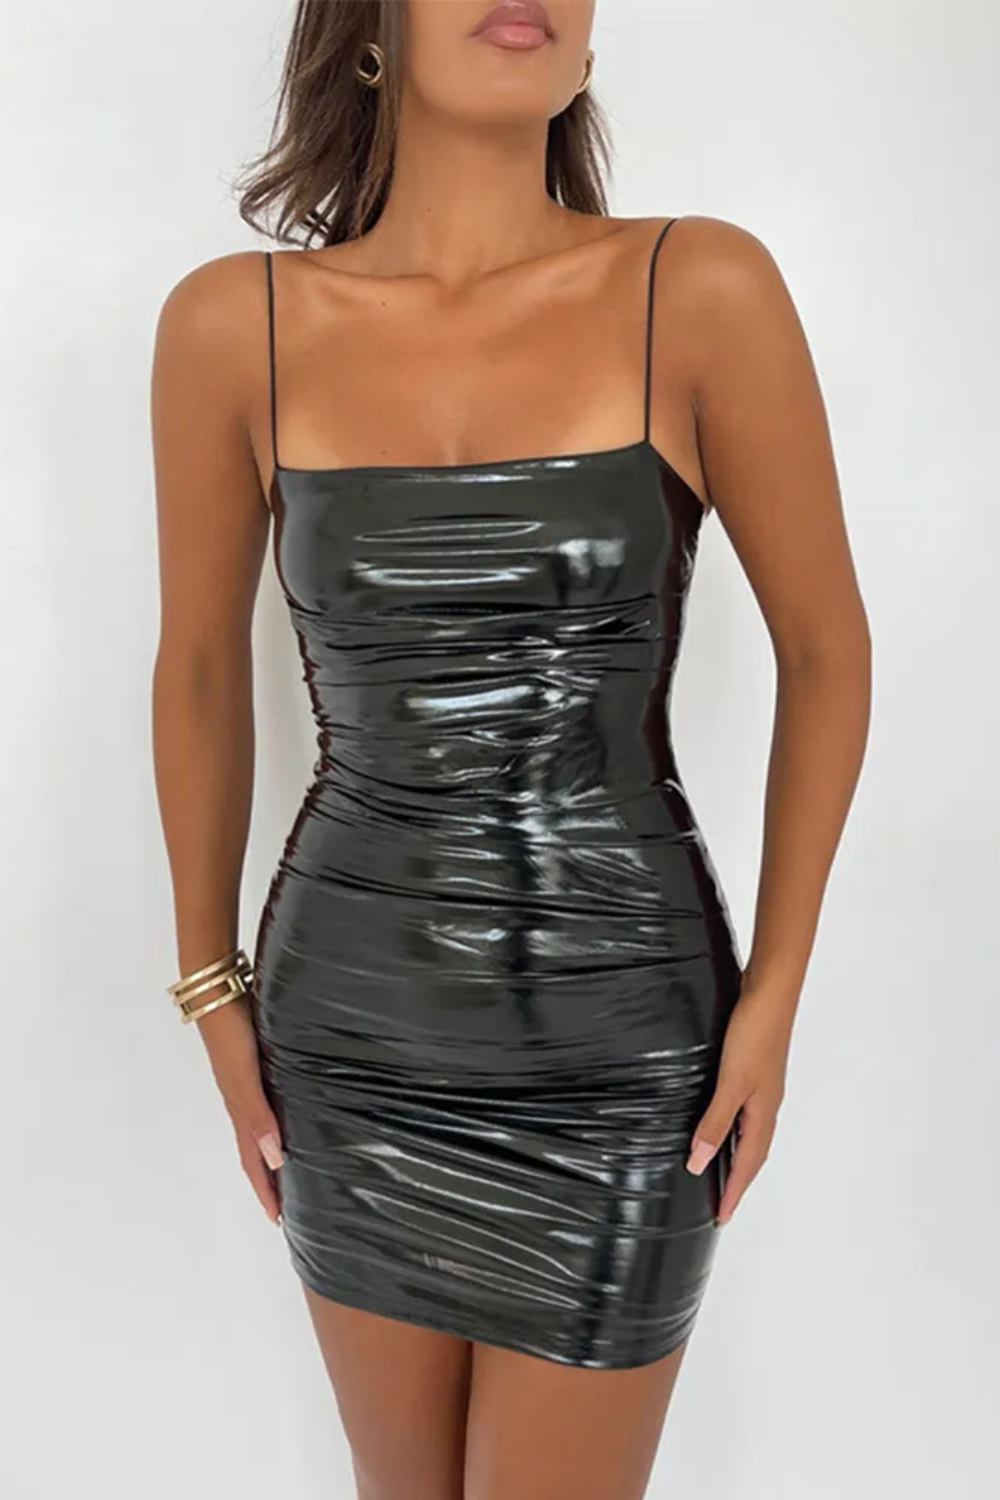 Miami Vice Faux Leather Dress - Black